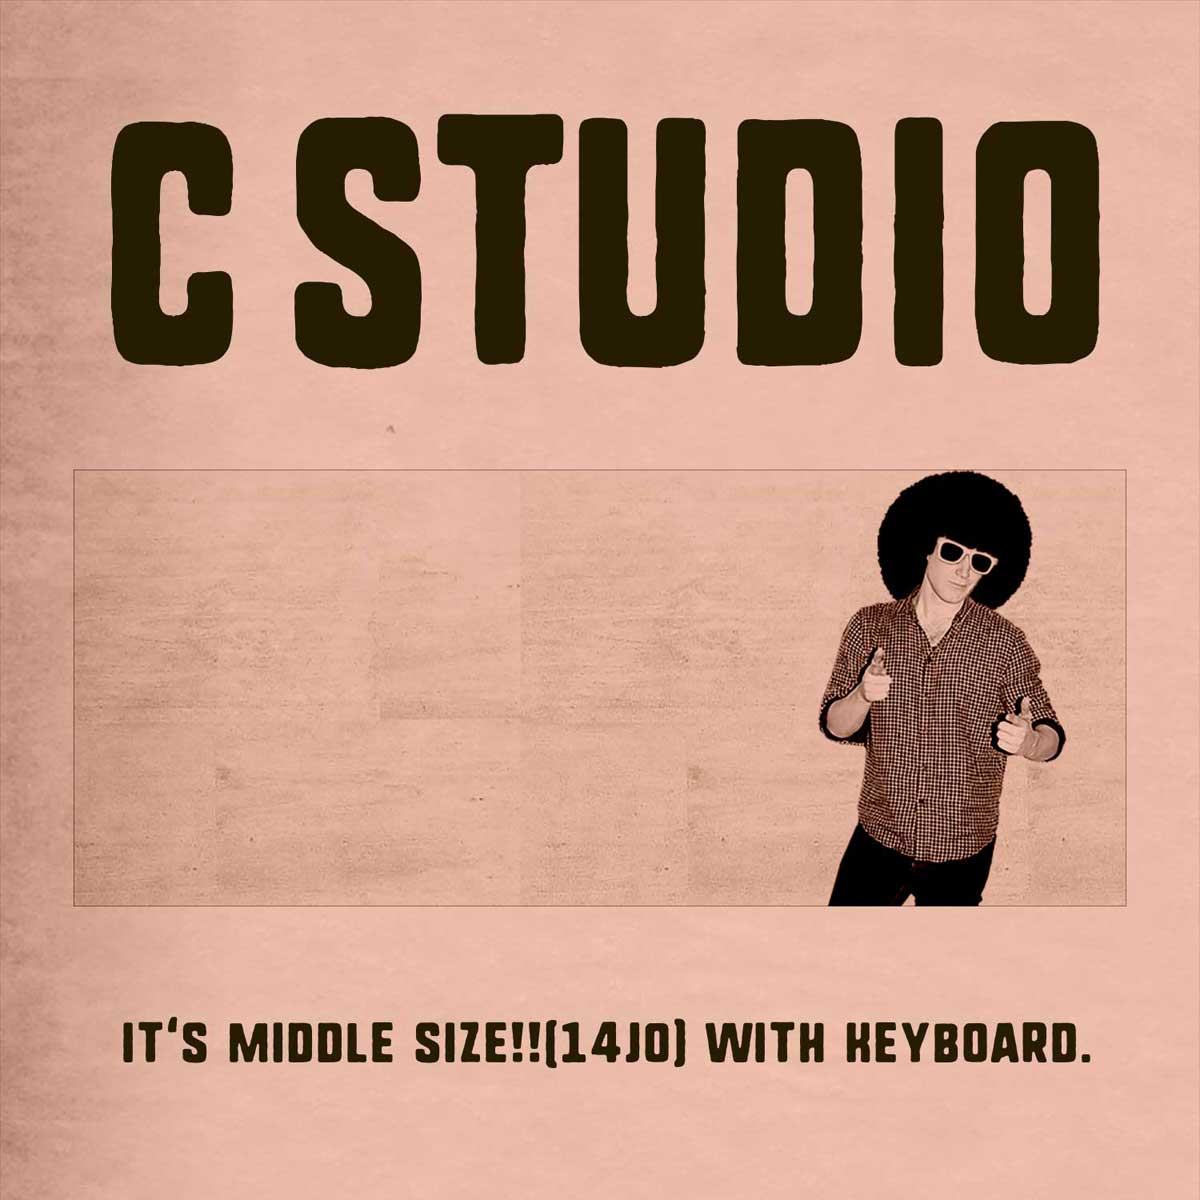 Cスタジオの機材と写真